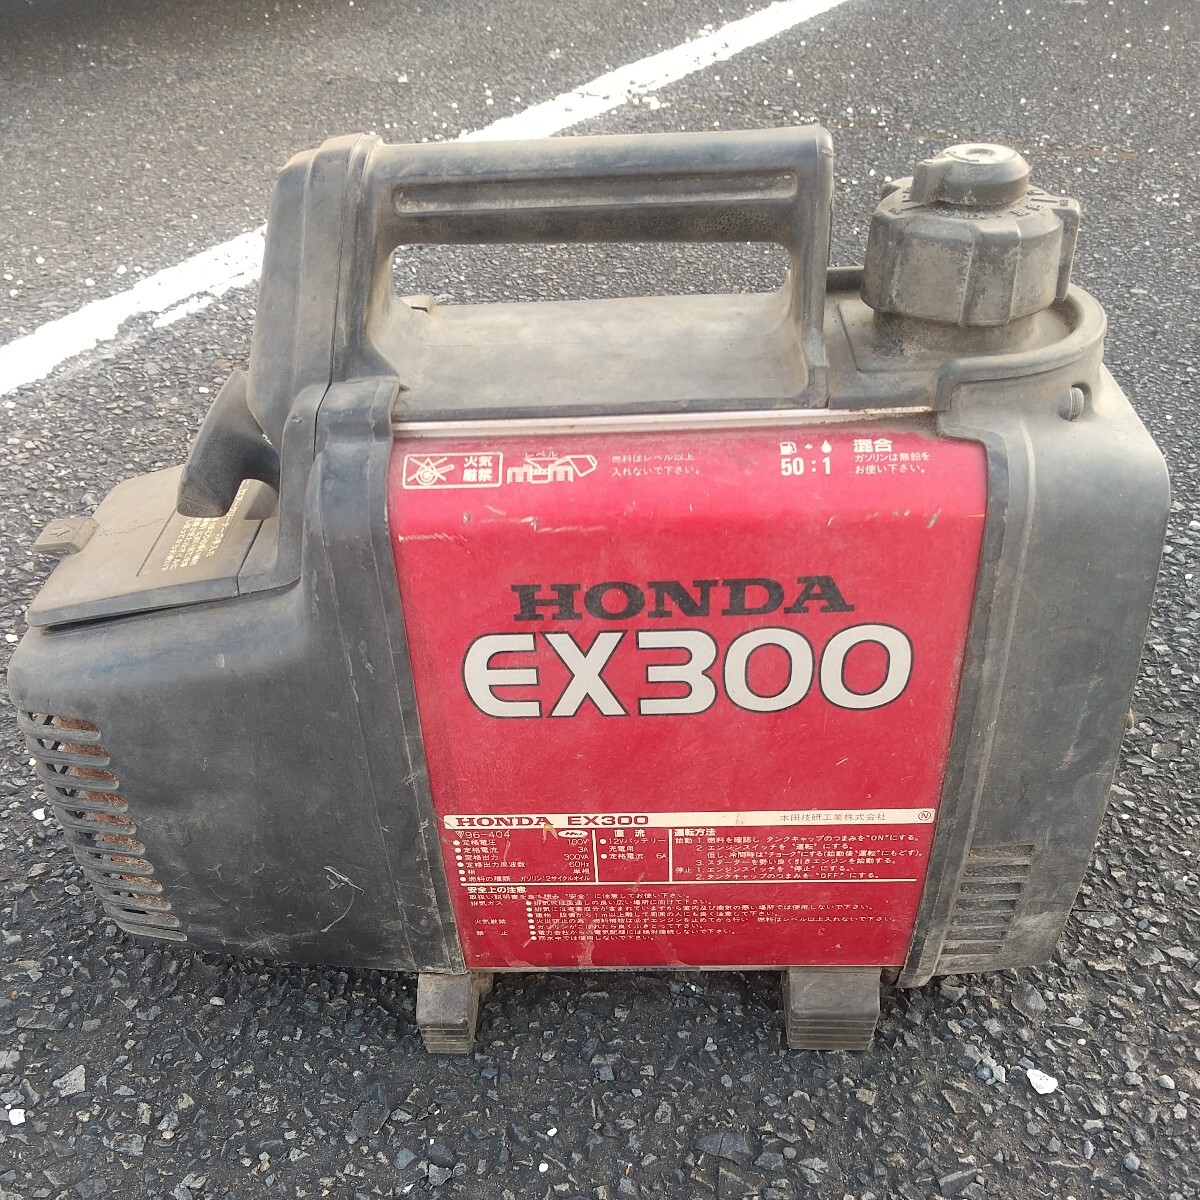  Honda HONDA small size generator EX300 part removing for junk 